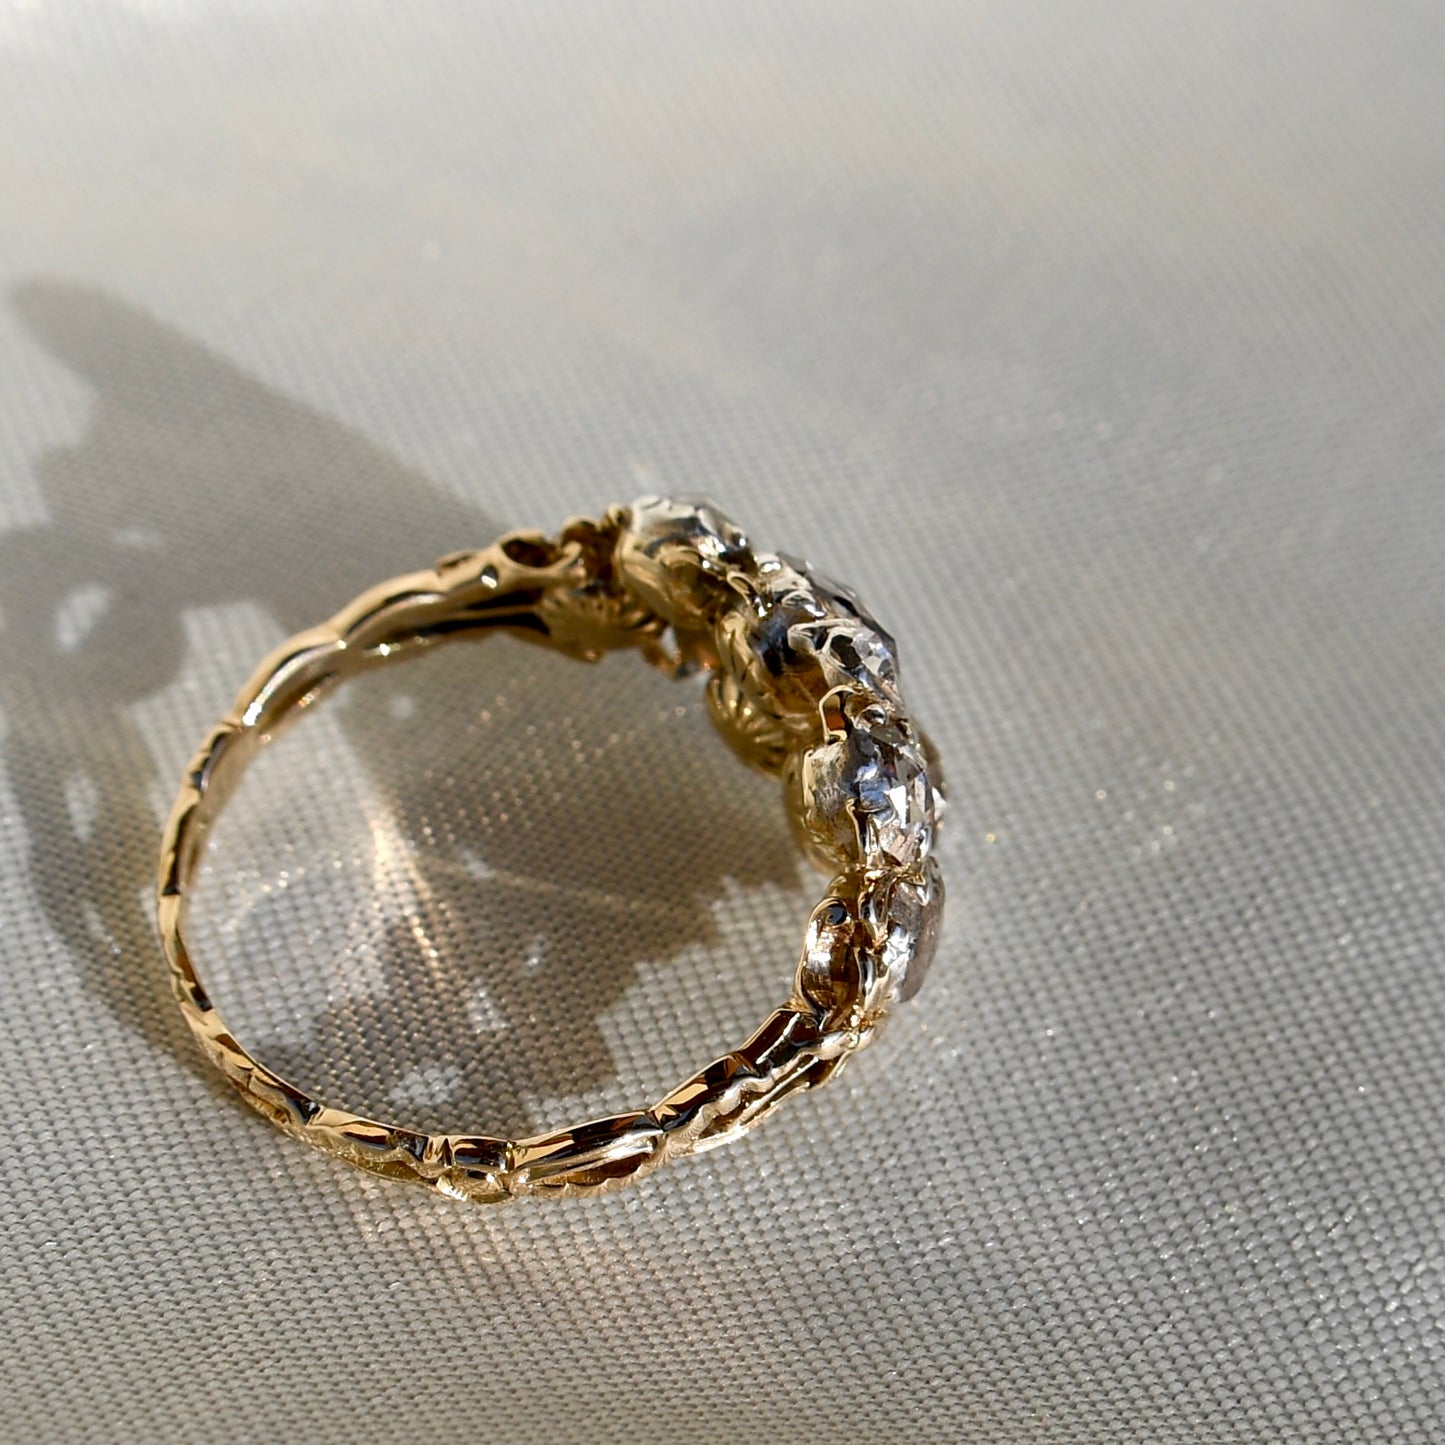 Antique Rococo rose cut diamond Giardinetti ring, France around 1760